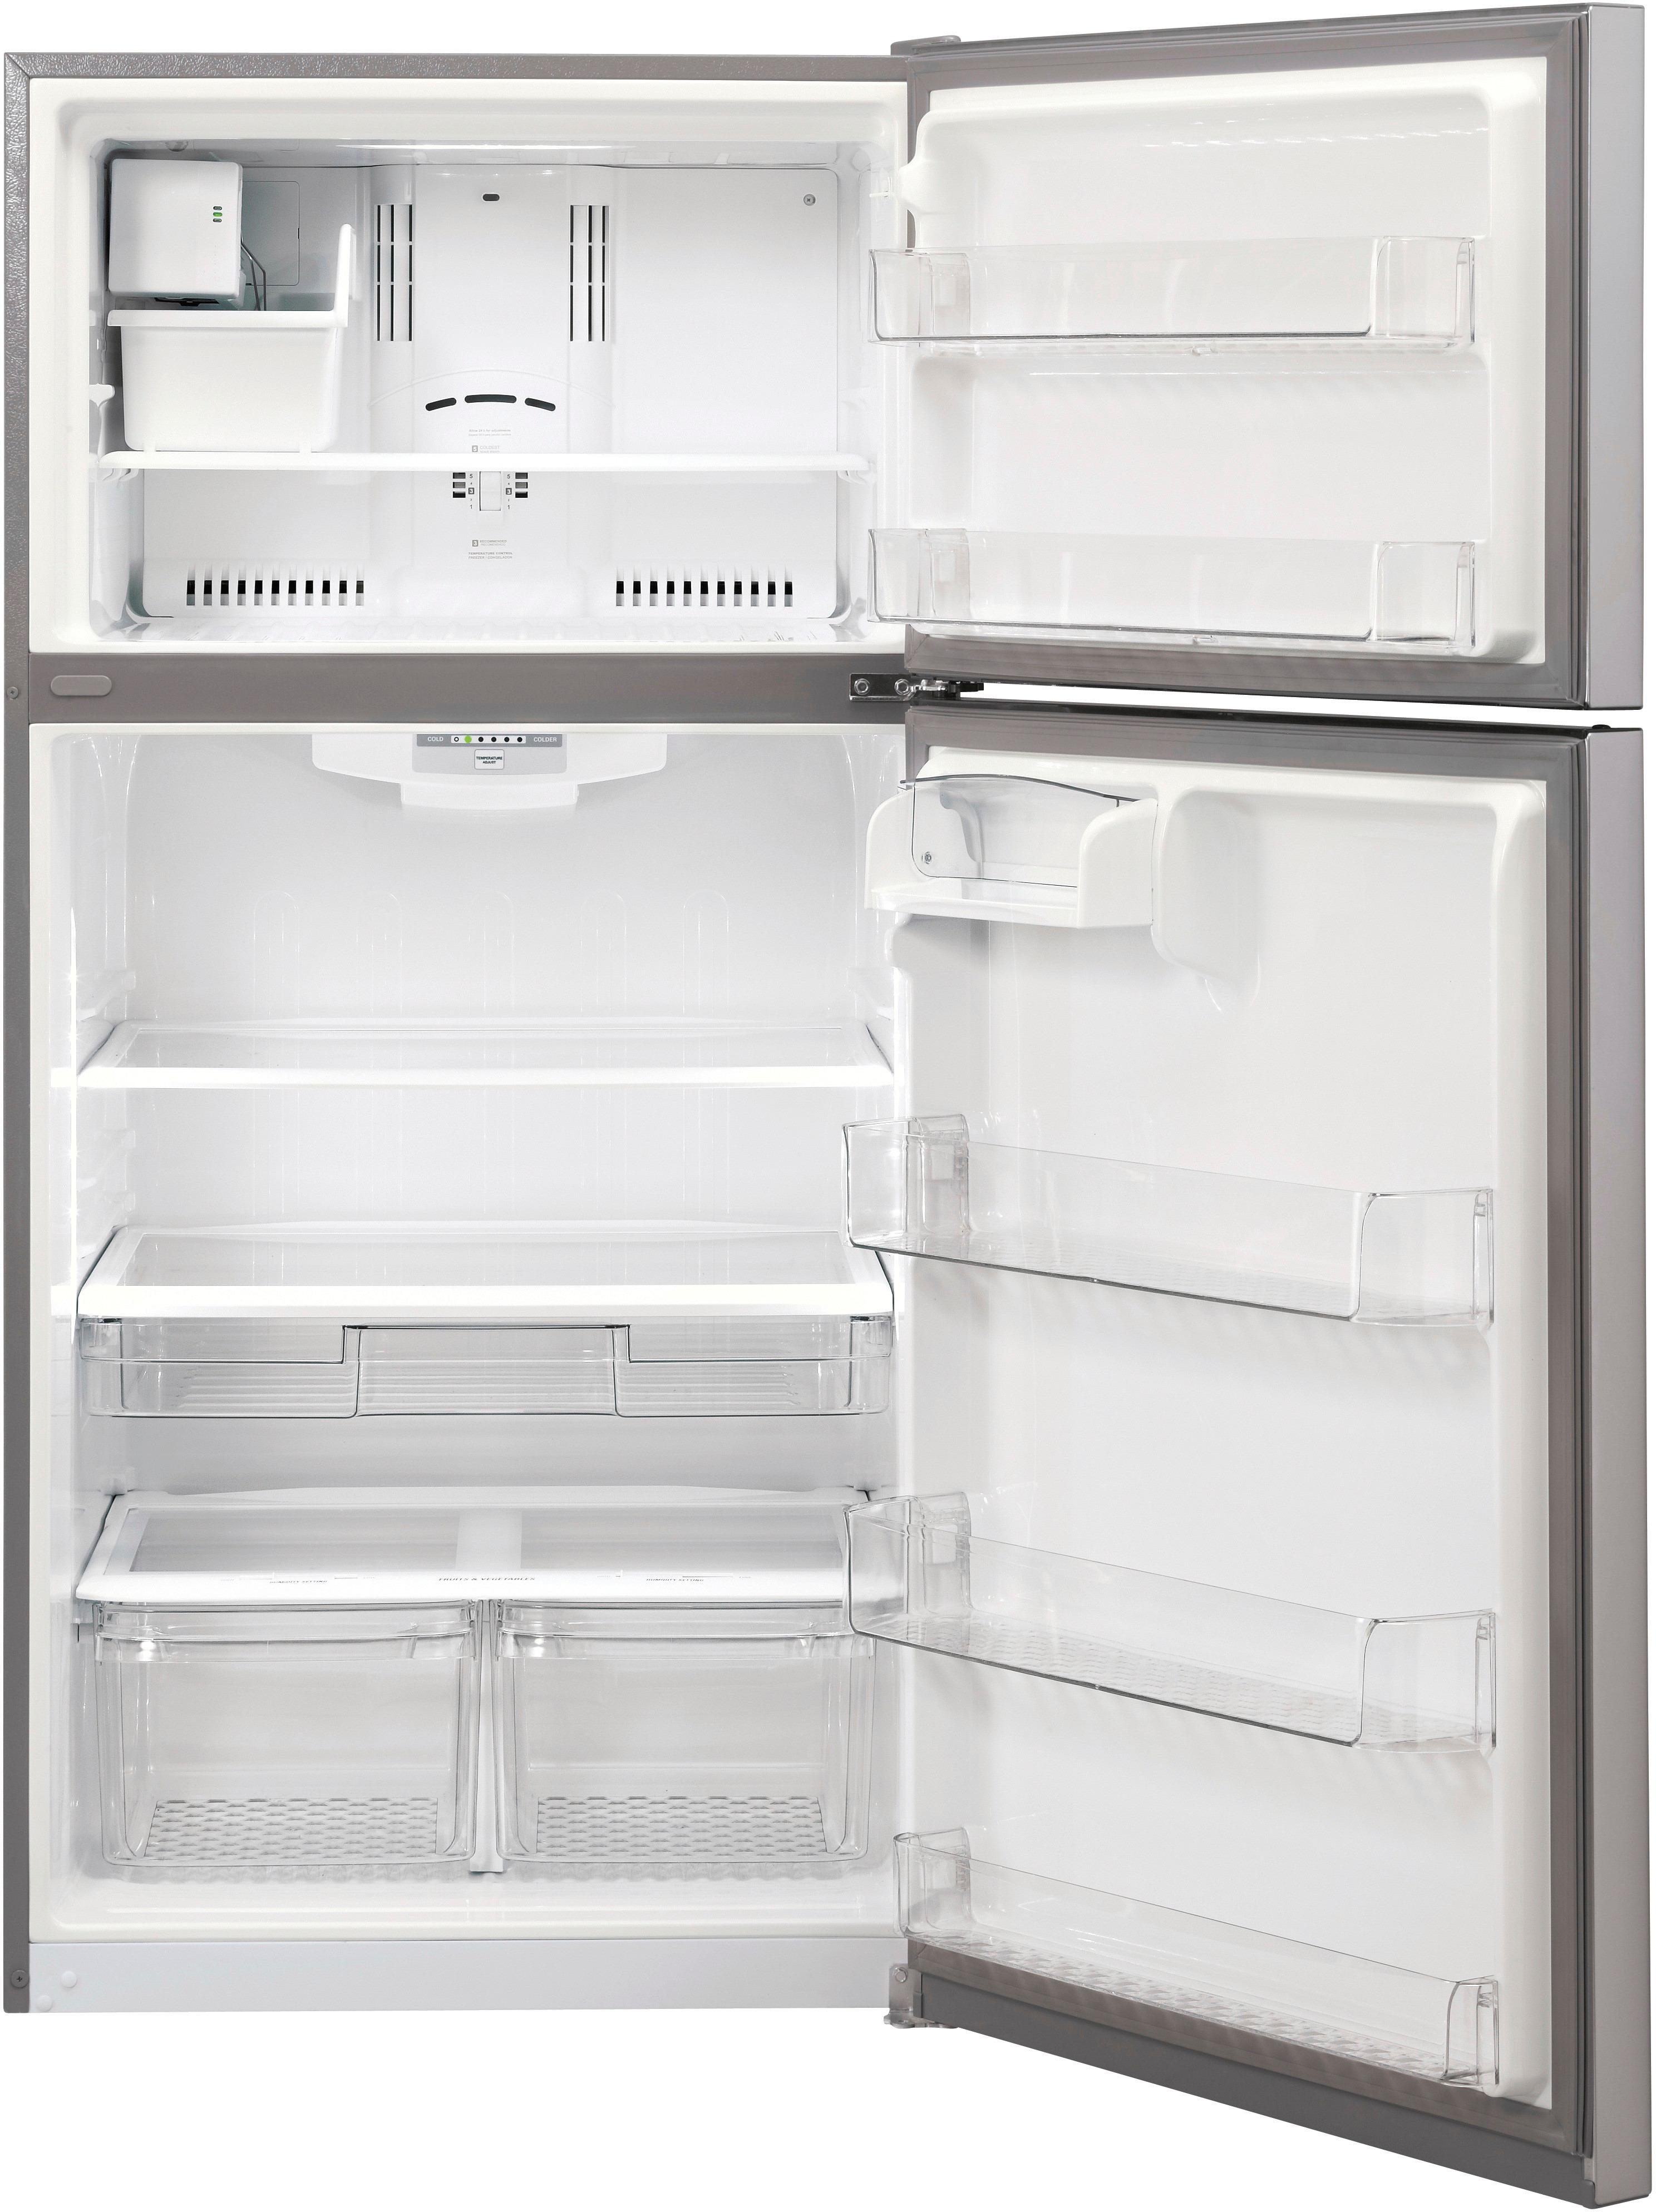 Customer Reviews: LG 20.2 Cu. Ft. Top-Freezer Refrigerator Stainless ...